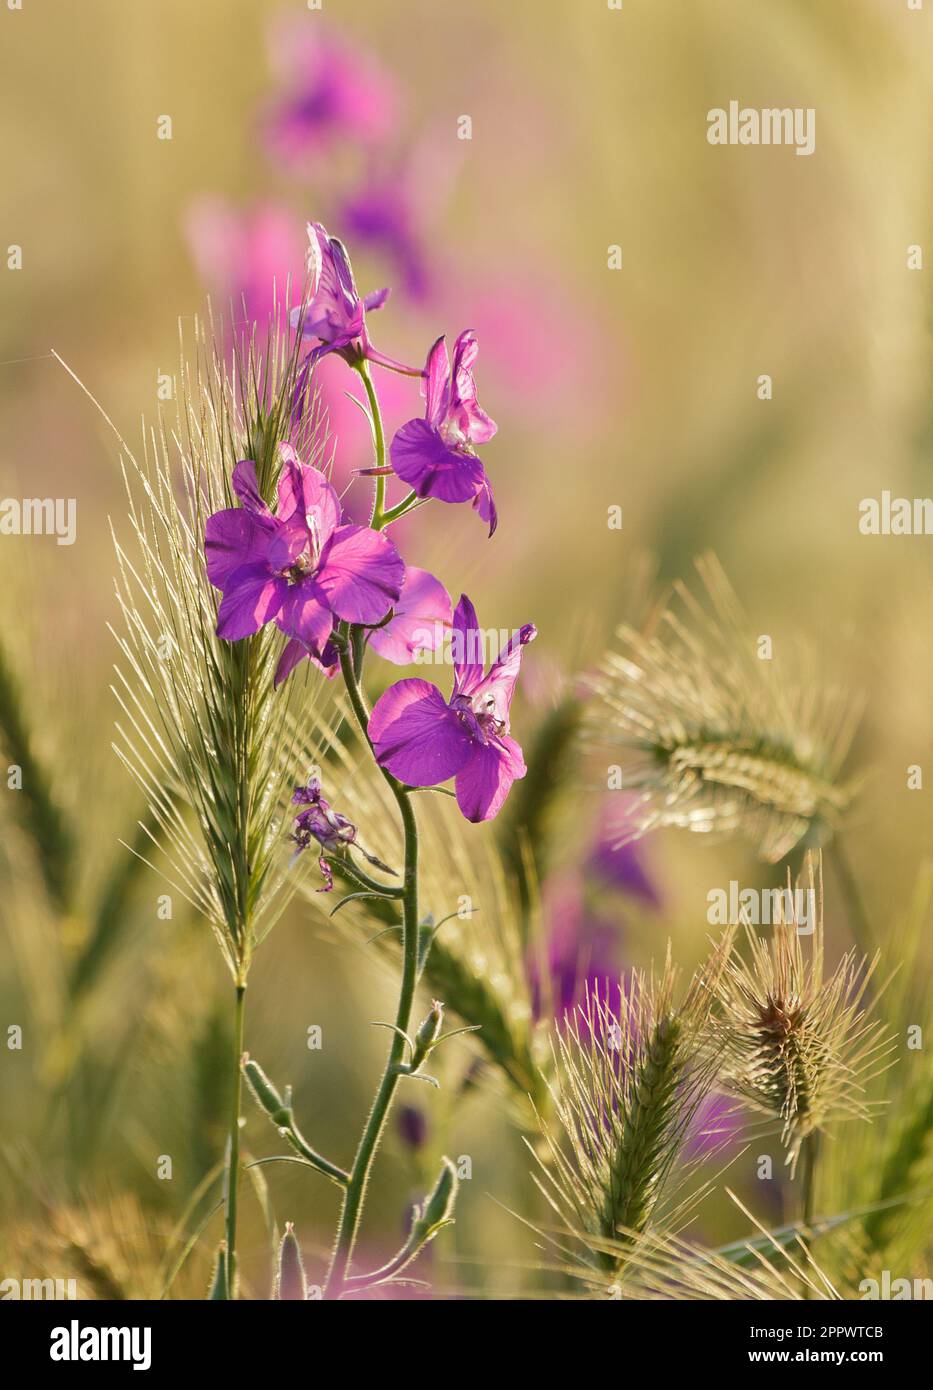 Delphinium Consolida orientalis — Oriental knight's-spur close up, wildflower. Stock Photo